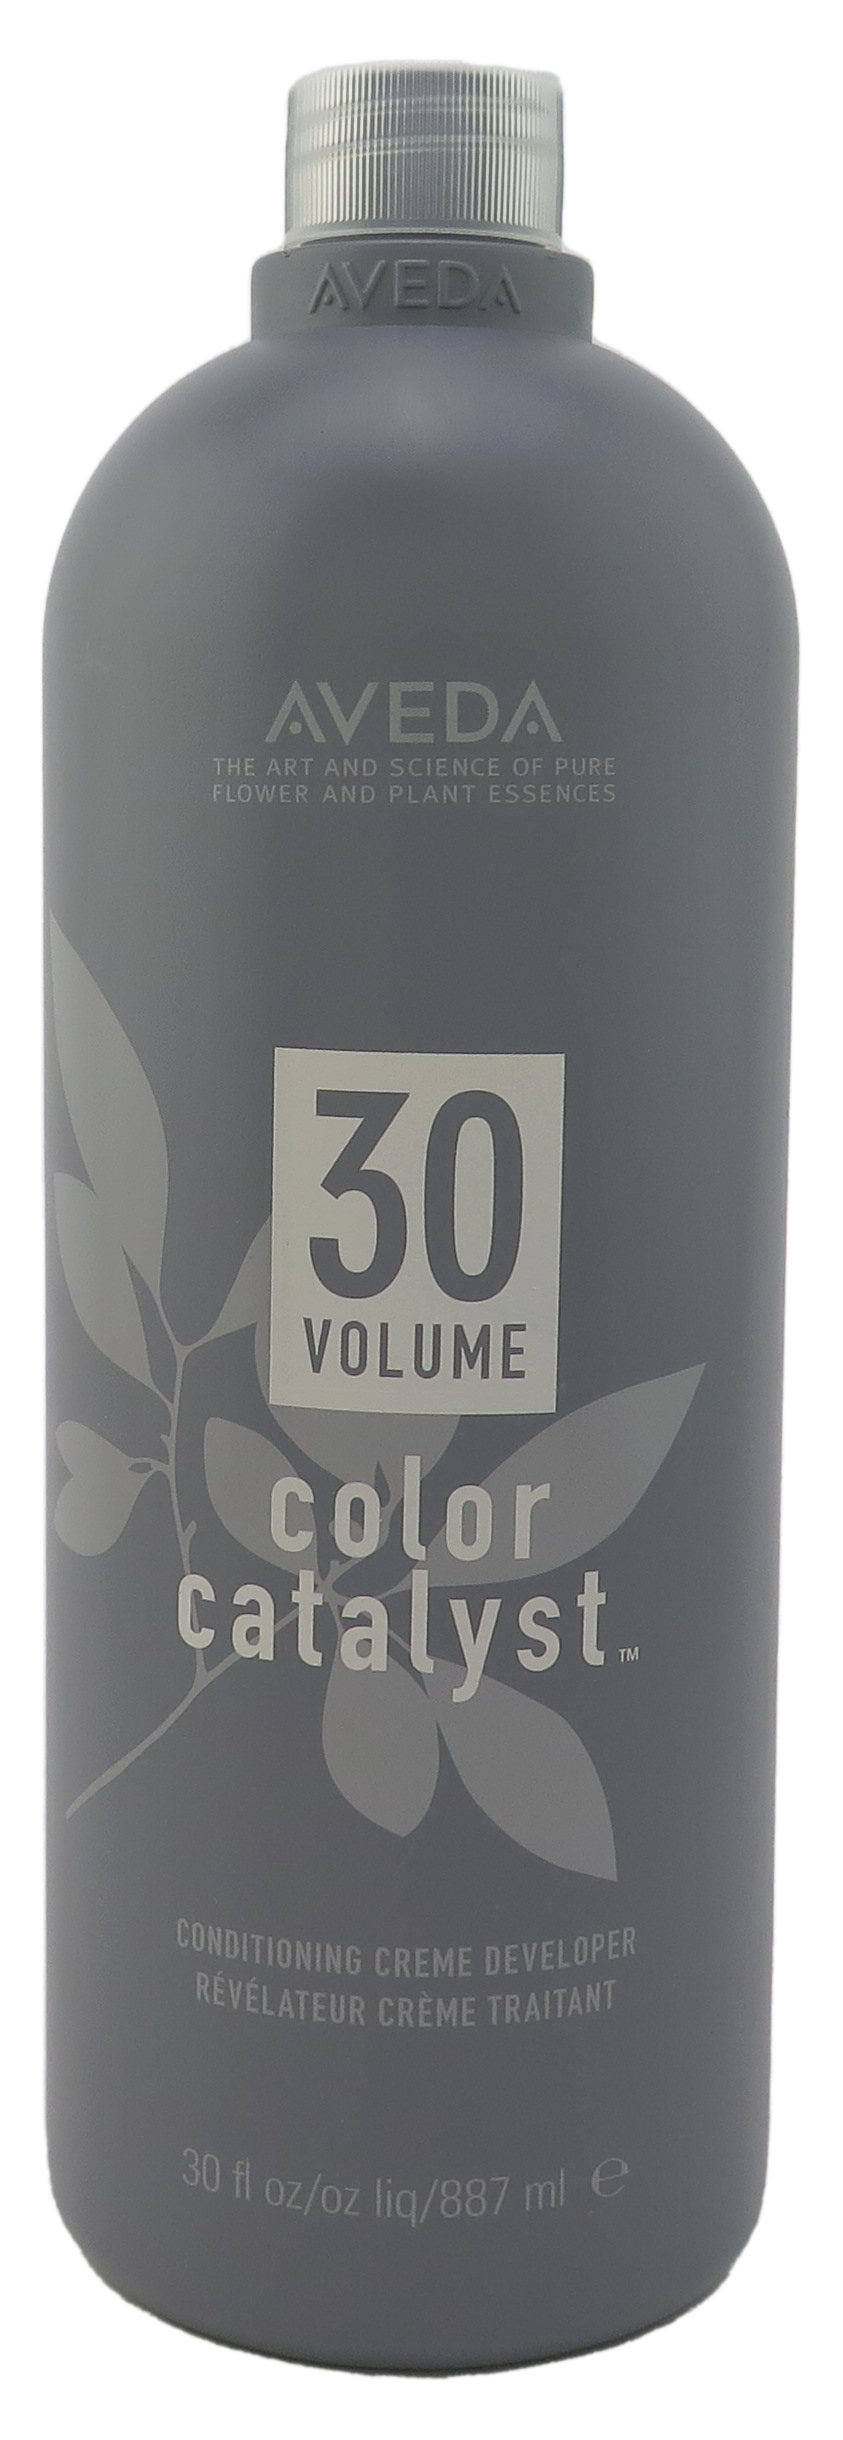 Aveda Volume 30 Color Catalyst Conditioning Creme Developer 30 Fl oz